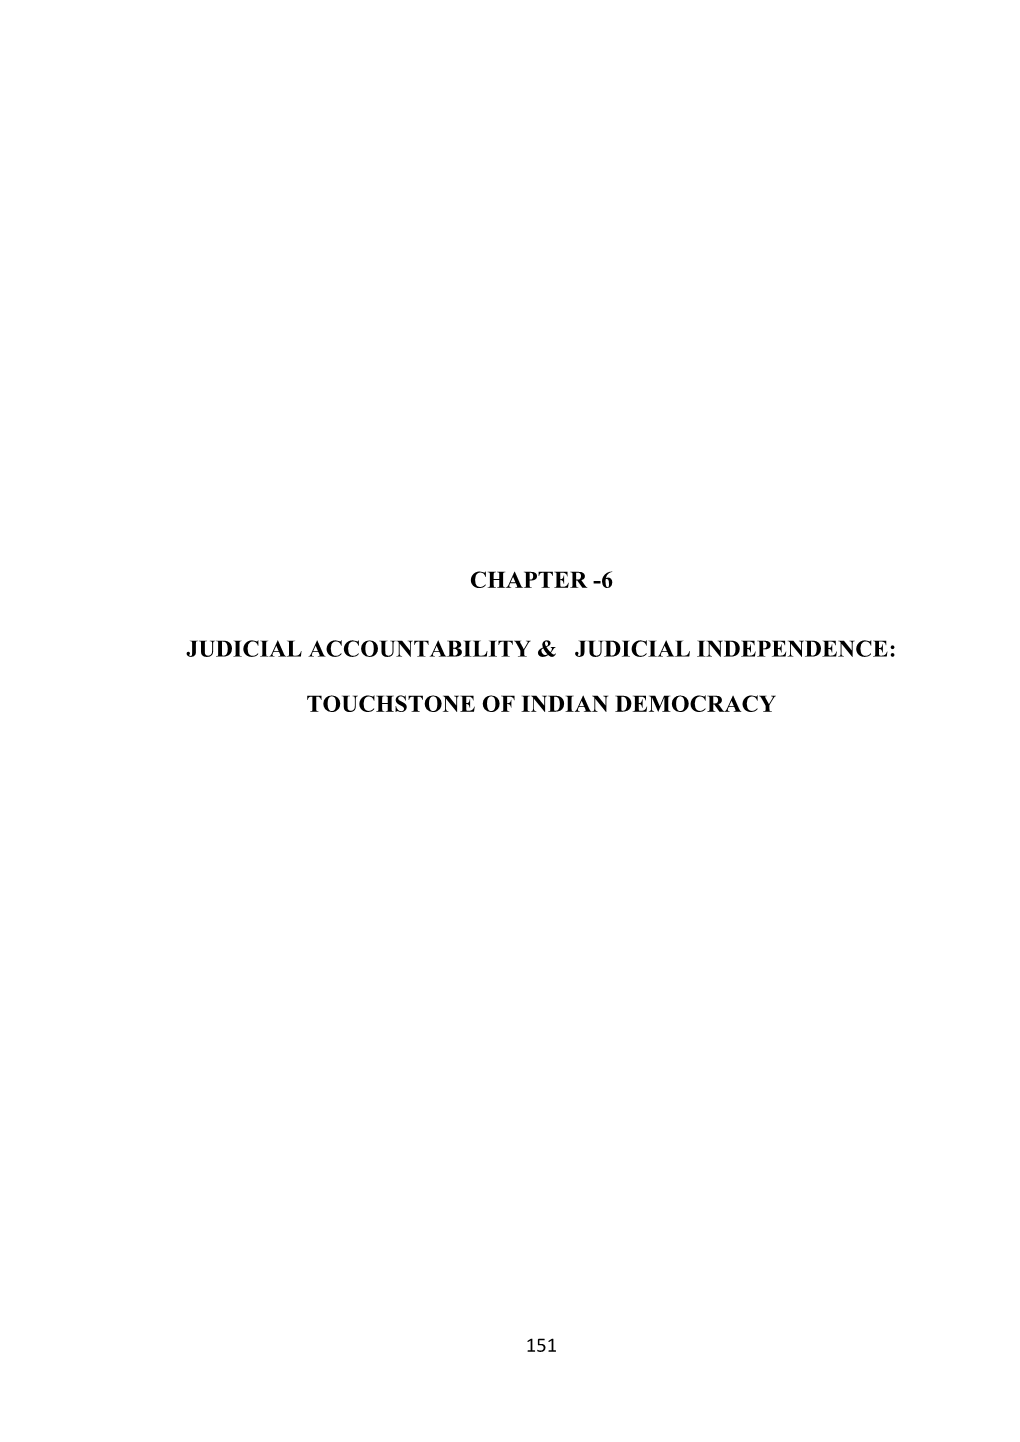 Chapter -6 Judicial Accountability & Judicial